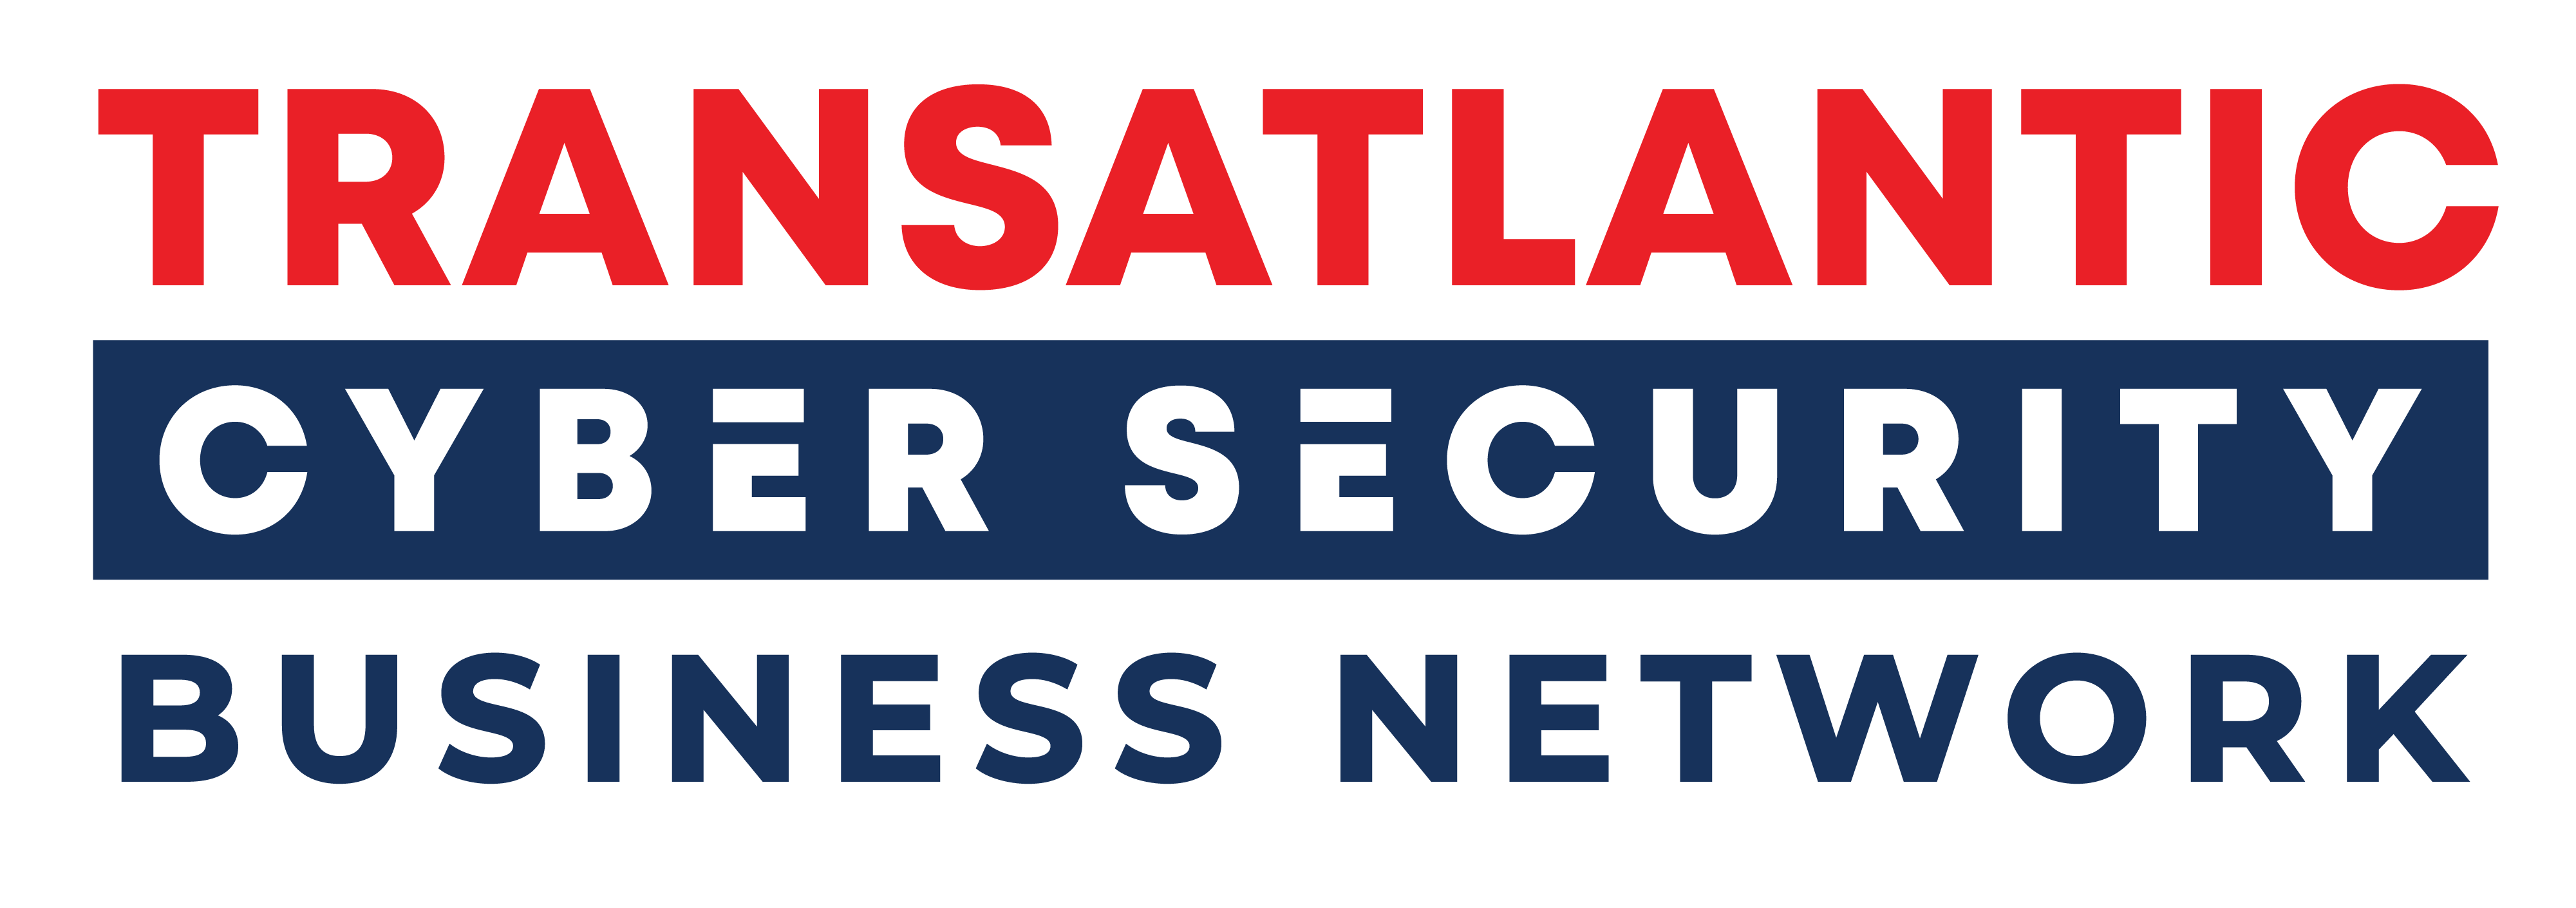 Transatlantic Cyber Security Business Network